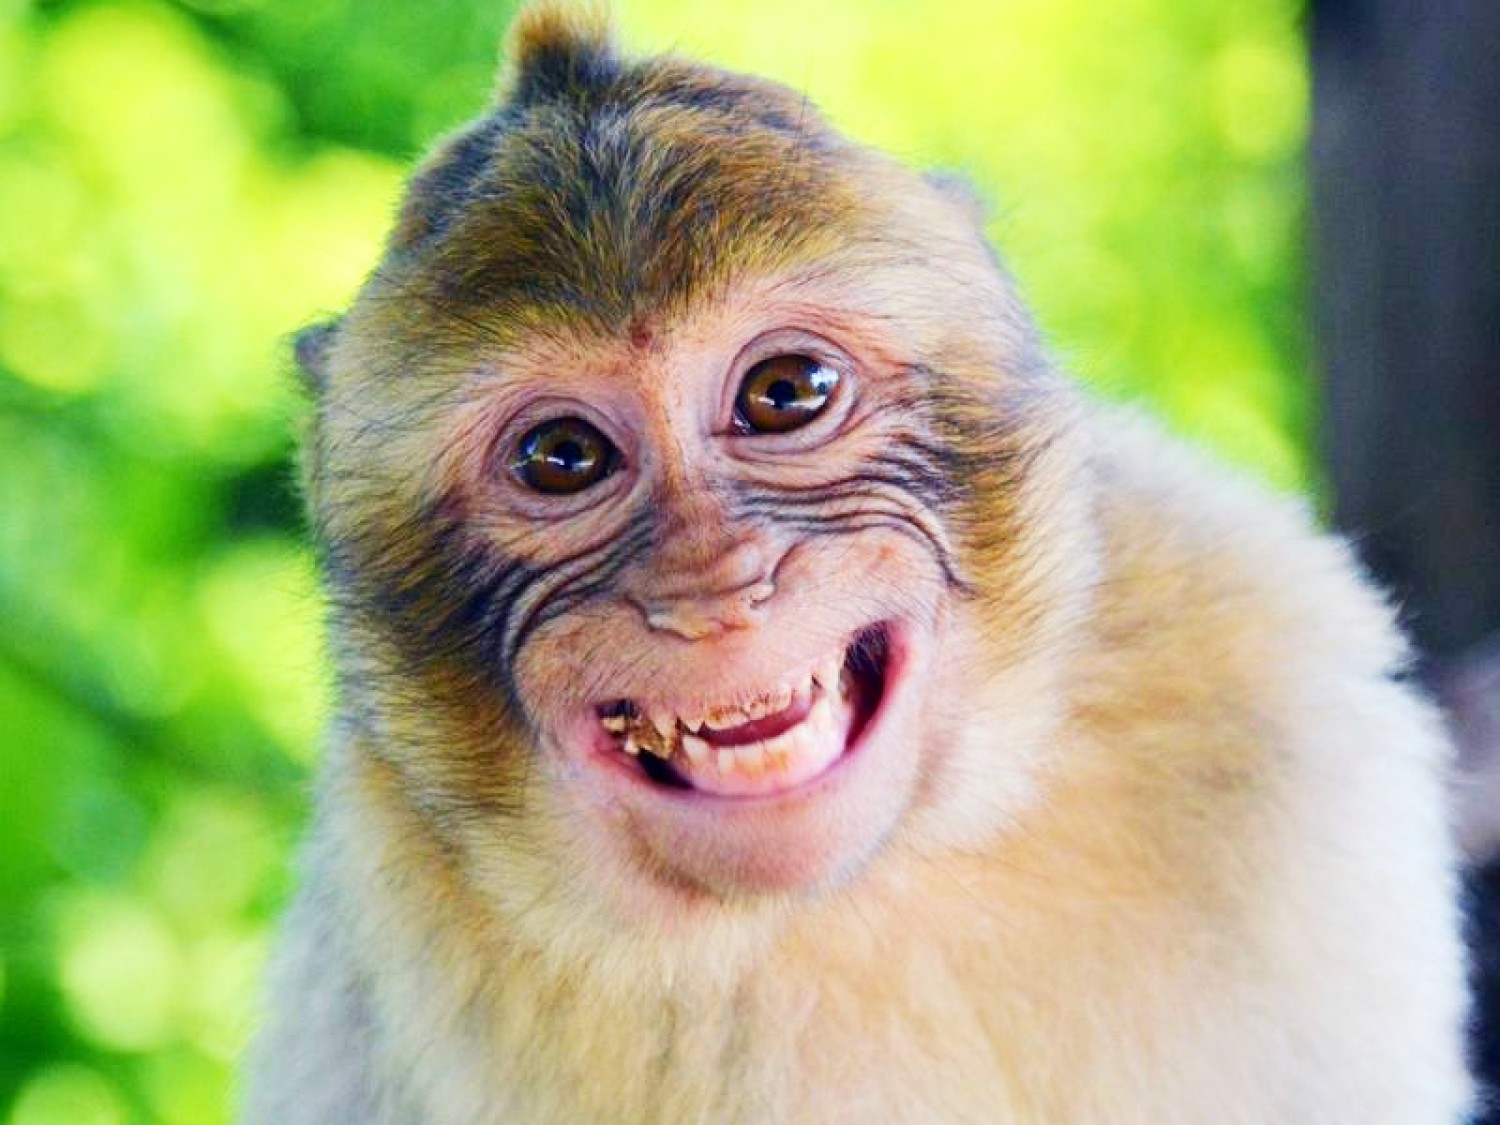 <img src="monkey.jpg" alt="monkey smiling at trentham forest"/> 